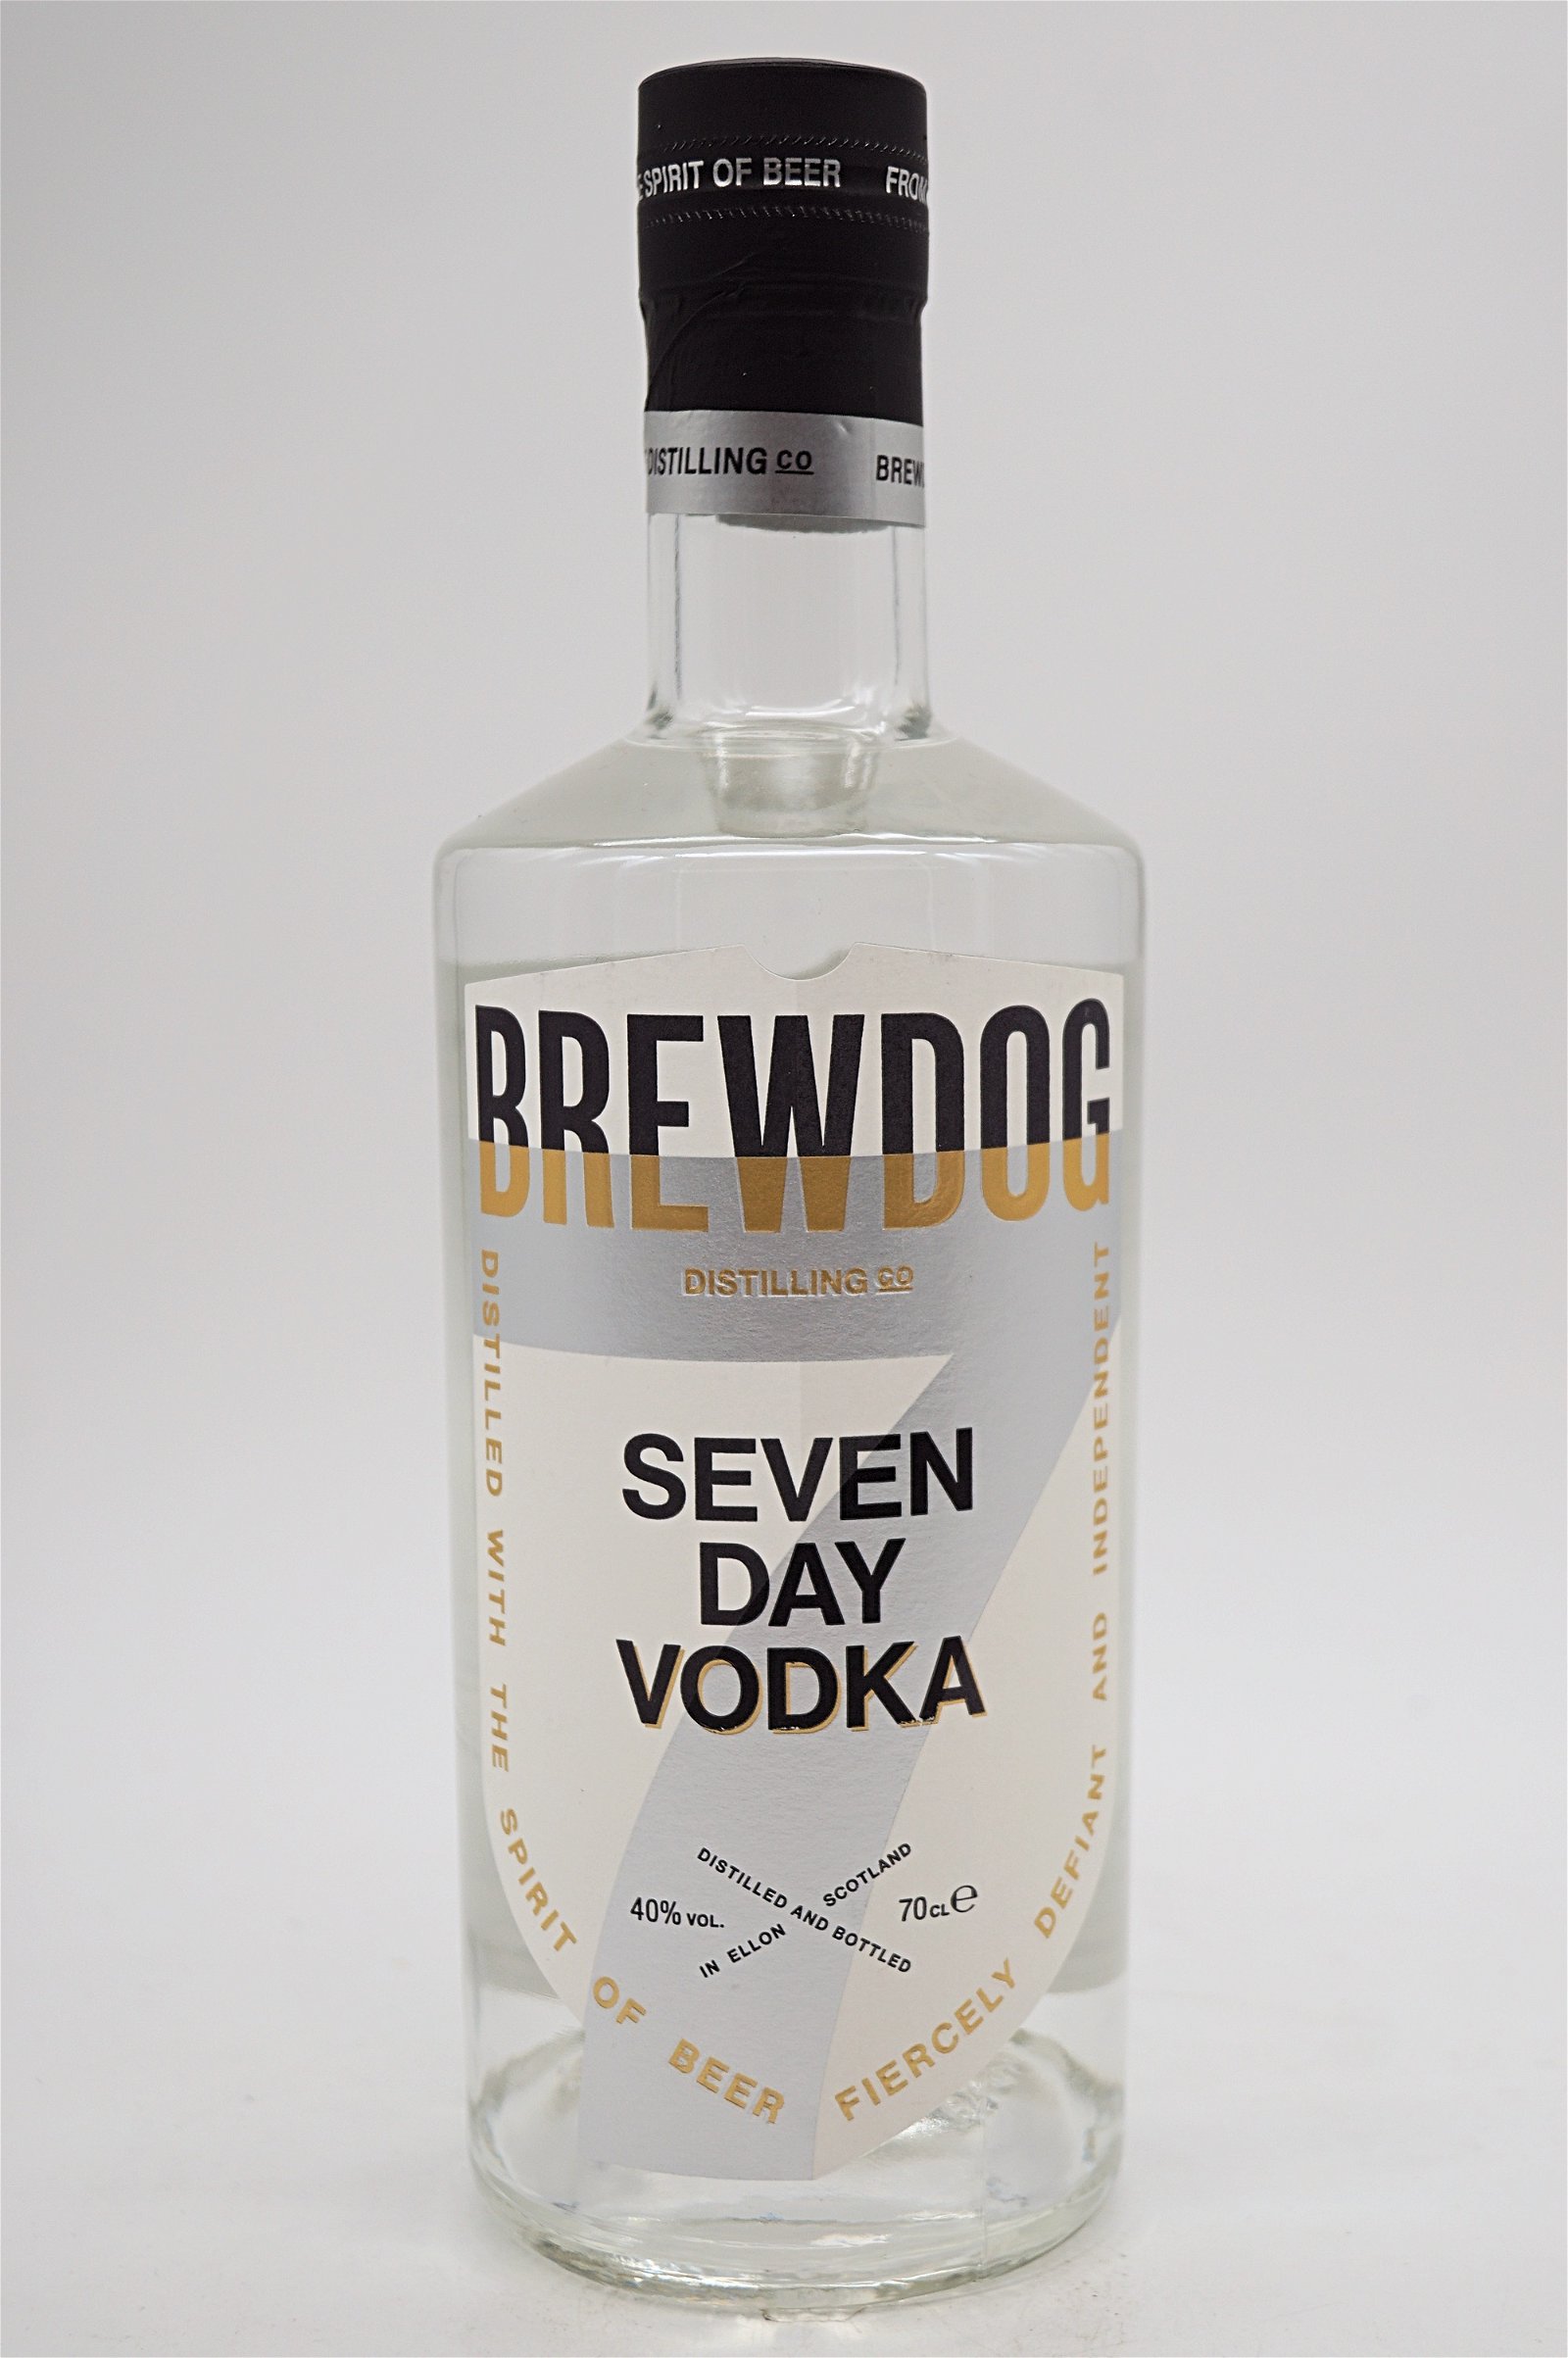 BrewDog Distilling Co. Seven Day Vodka